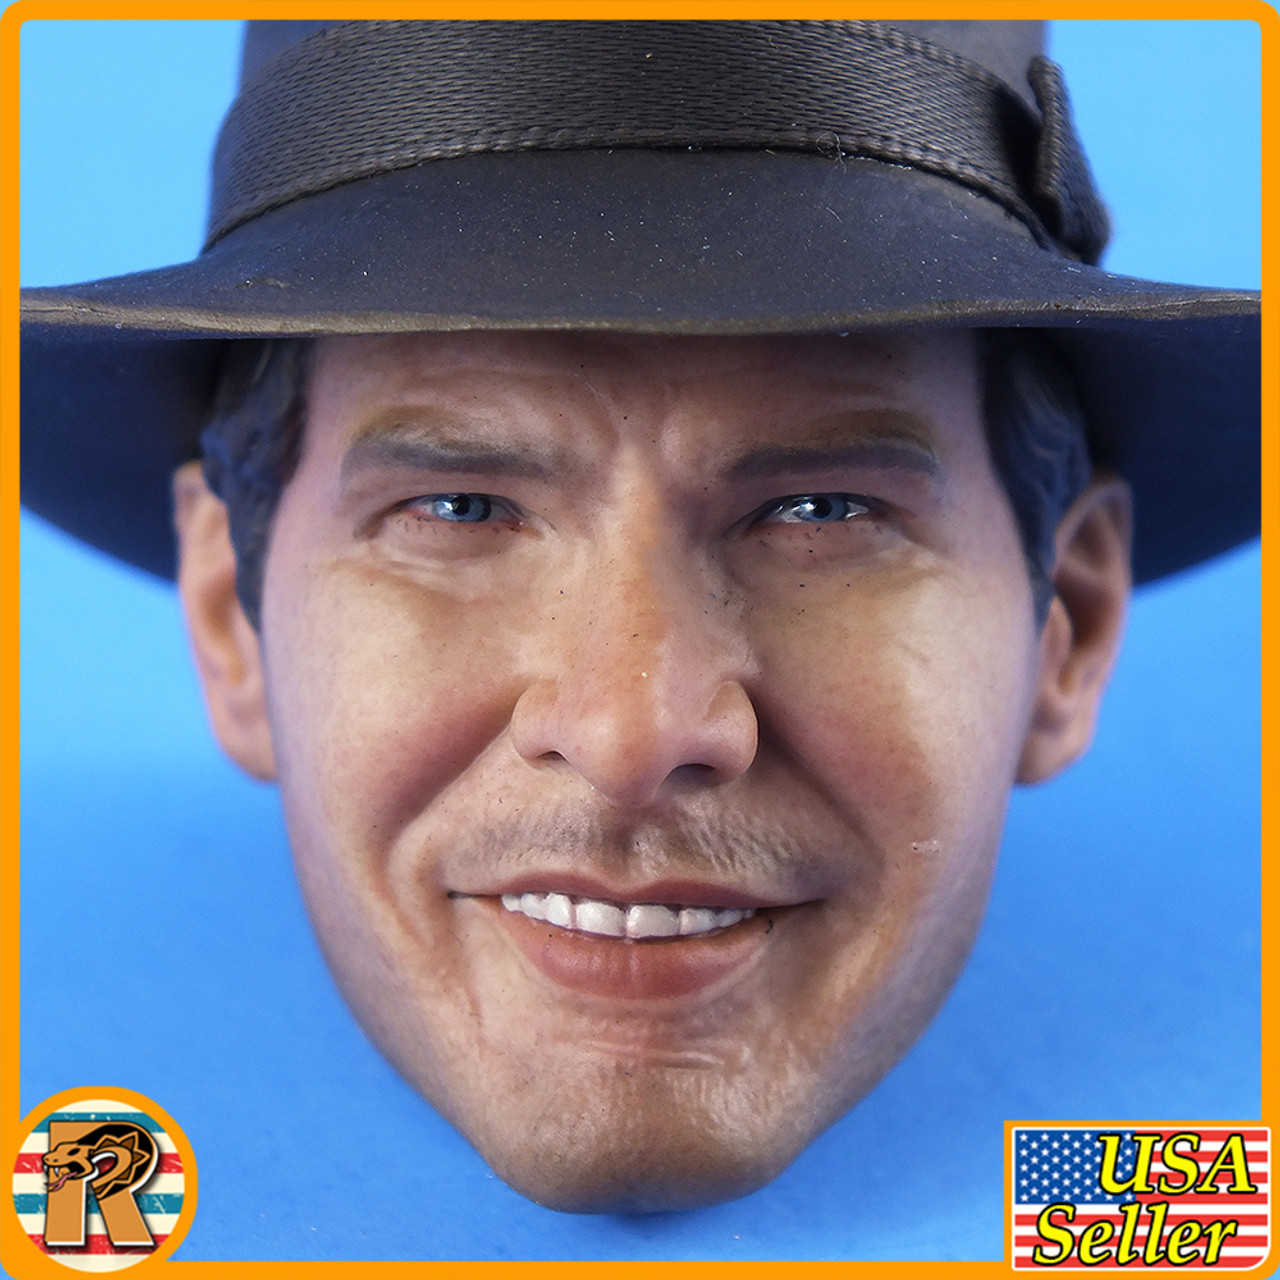 Raiders Indiana Jones - Smiling Head w/ Hat #2 - 1/6 Scale -